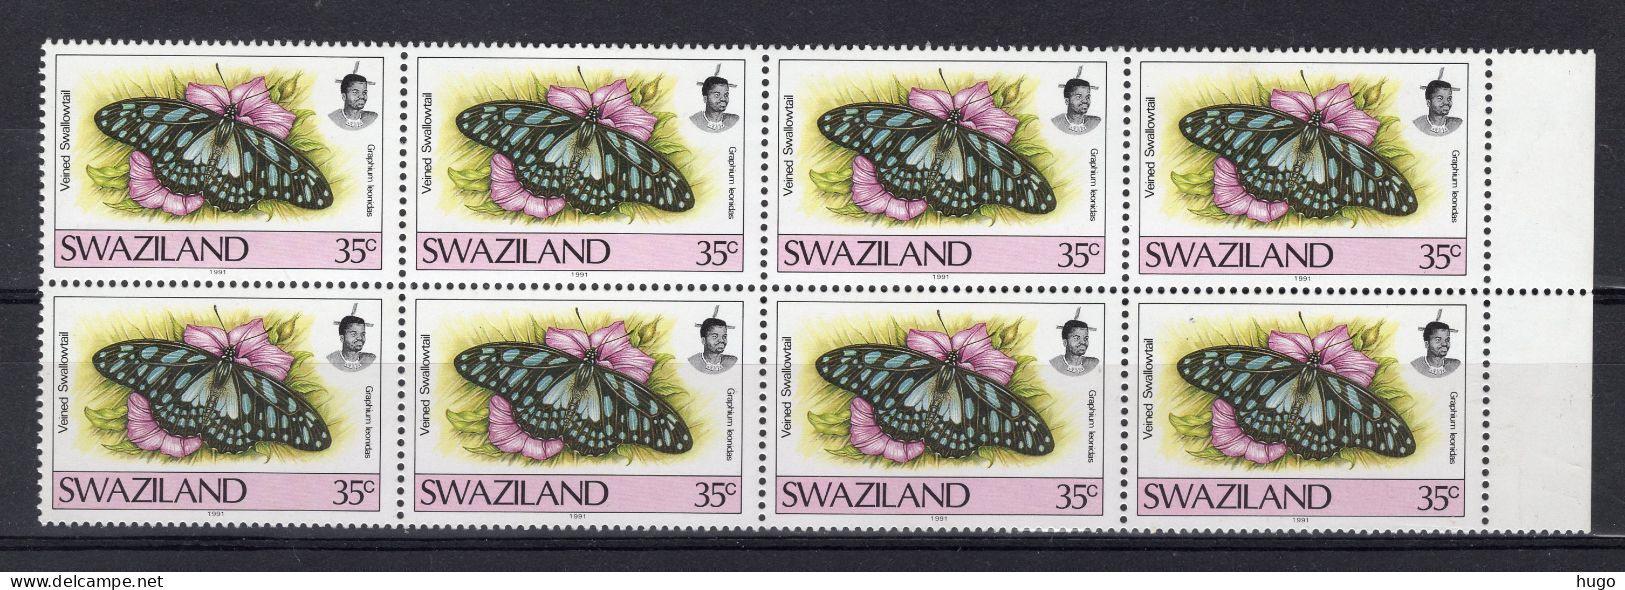 SWAZILAND Yt. 517 MNH  8 Stuks 1987 - Swaziland (1968-...)